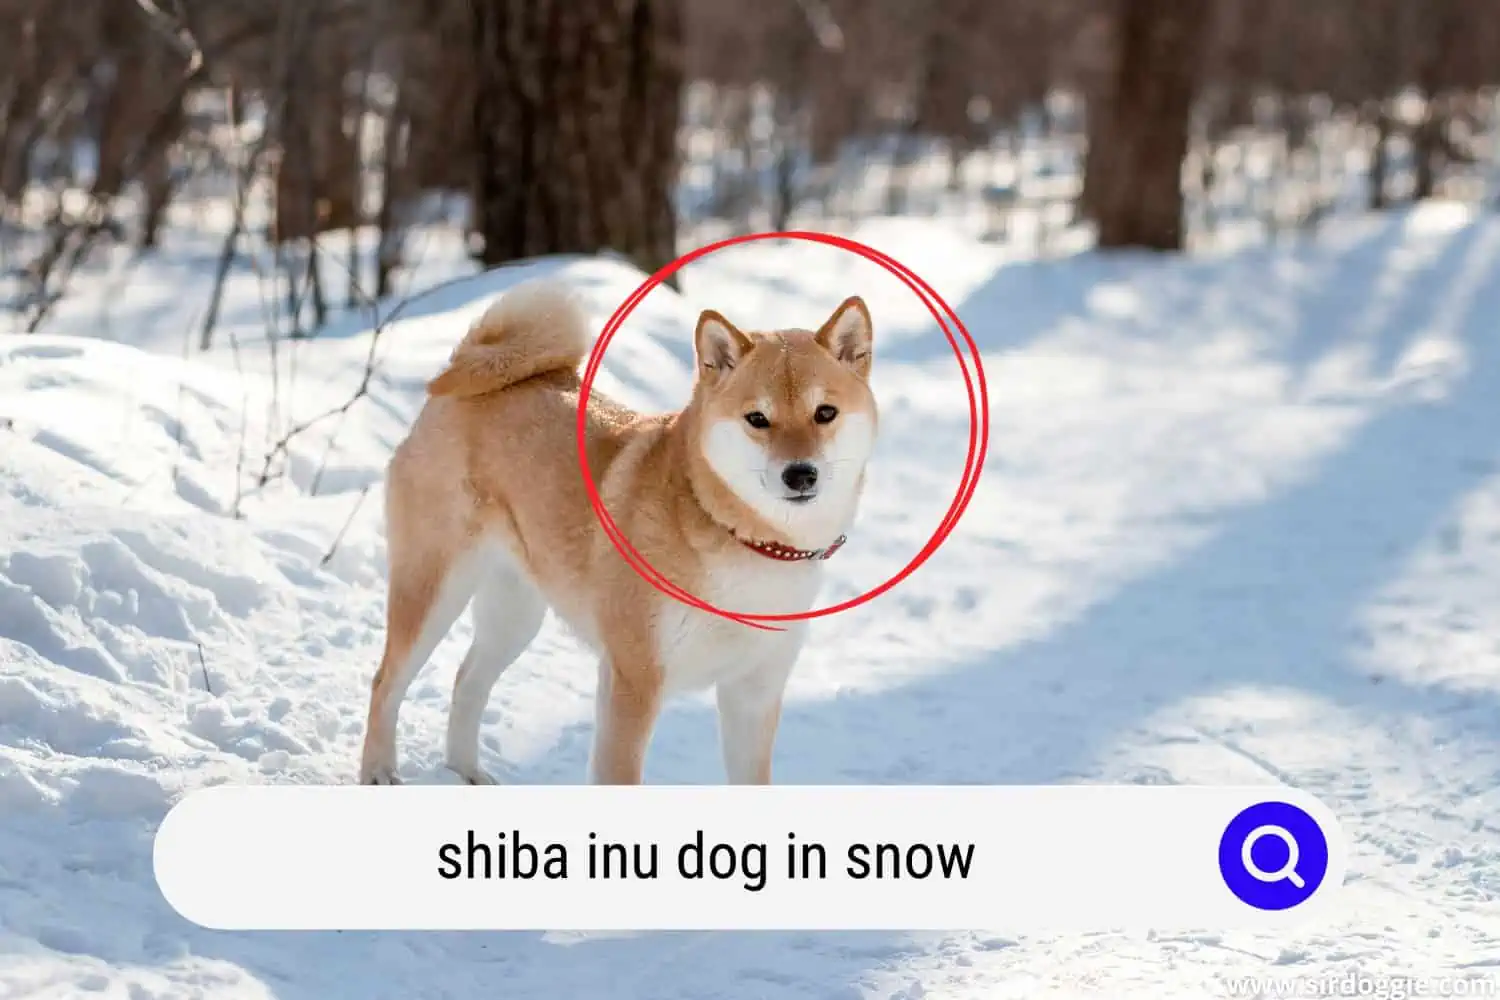 shiba inu dog walking in snow